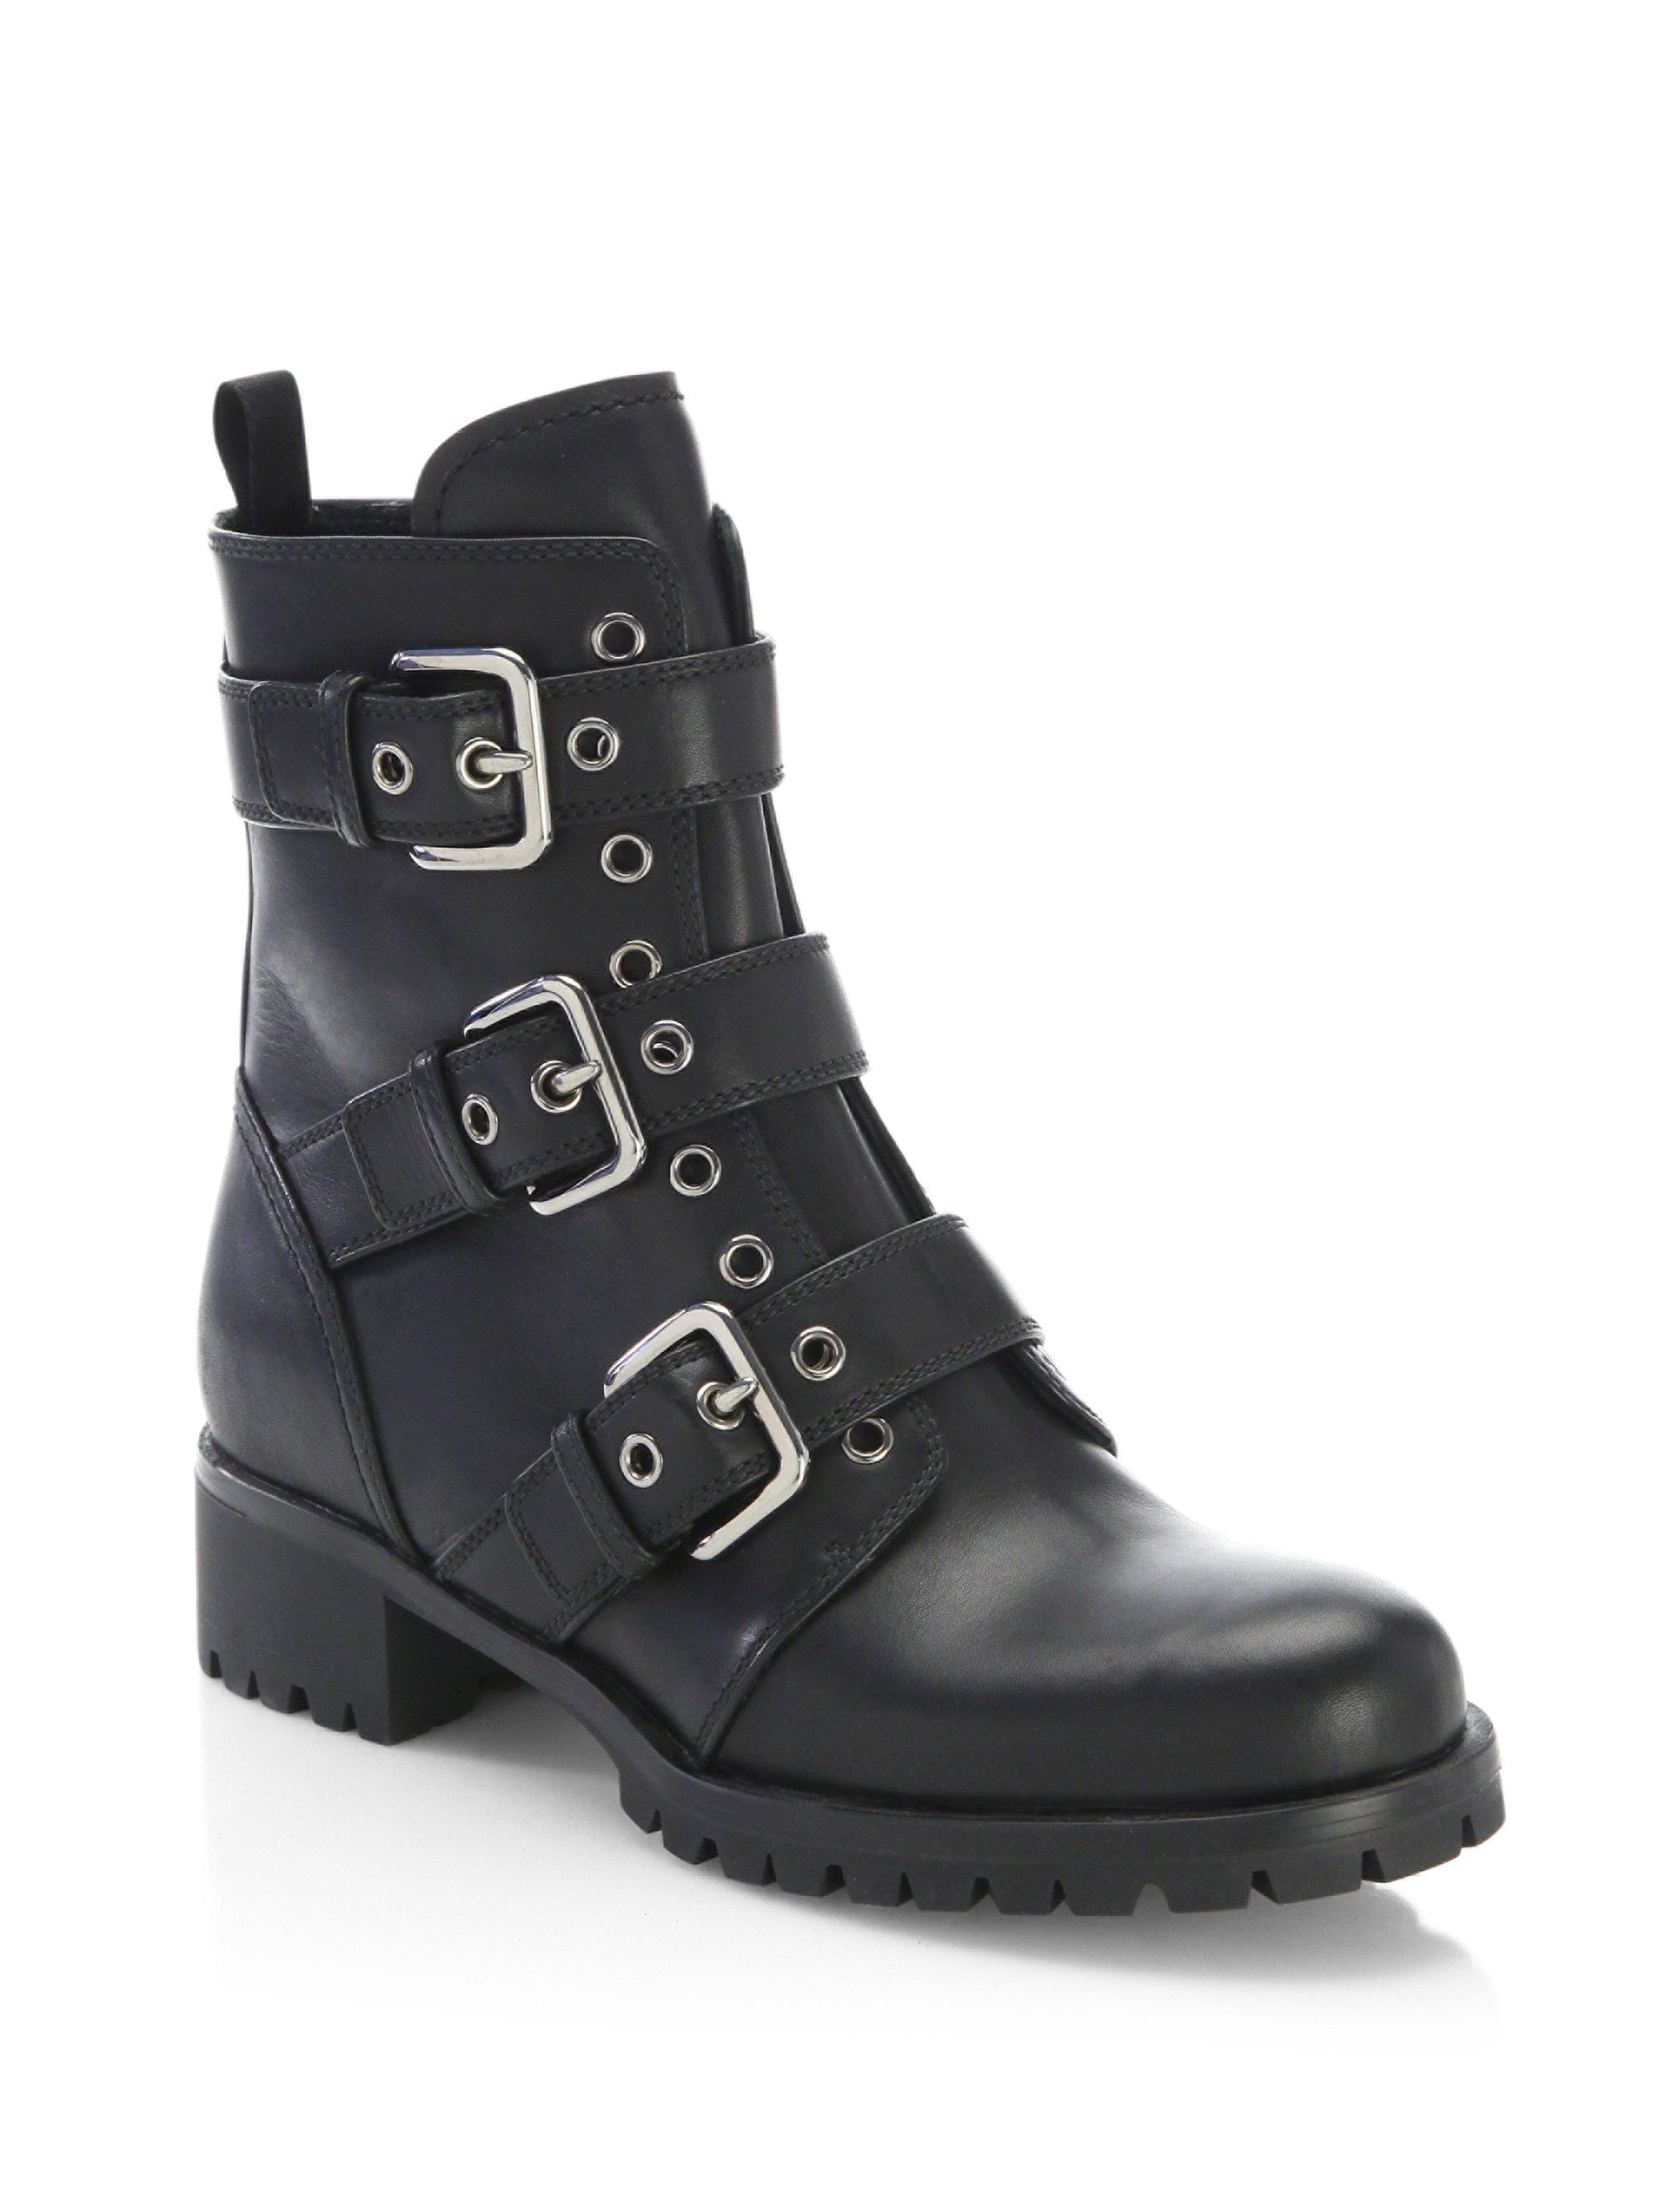 Prada Grommet Leather Combat Boots in Black - Lyst